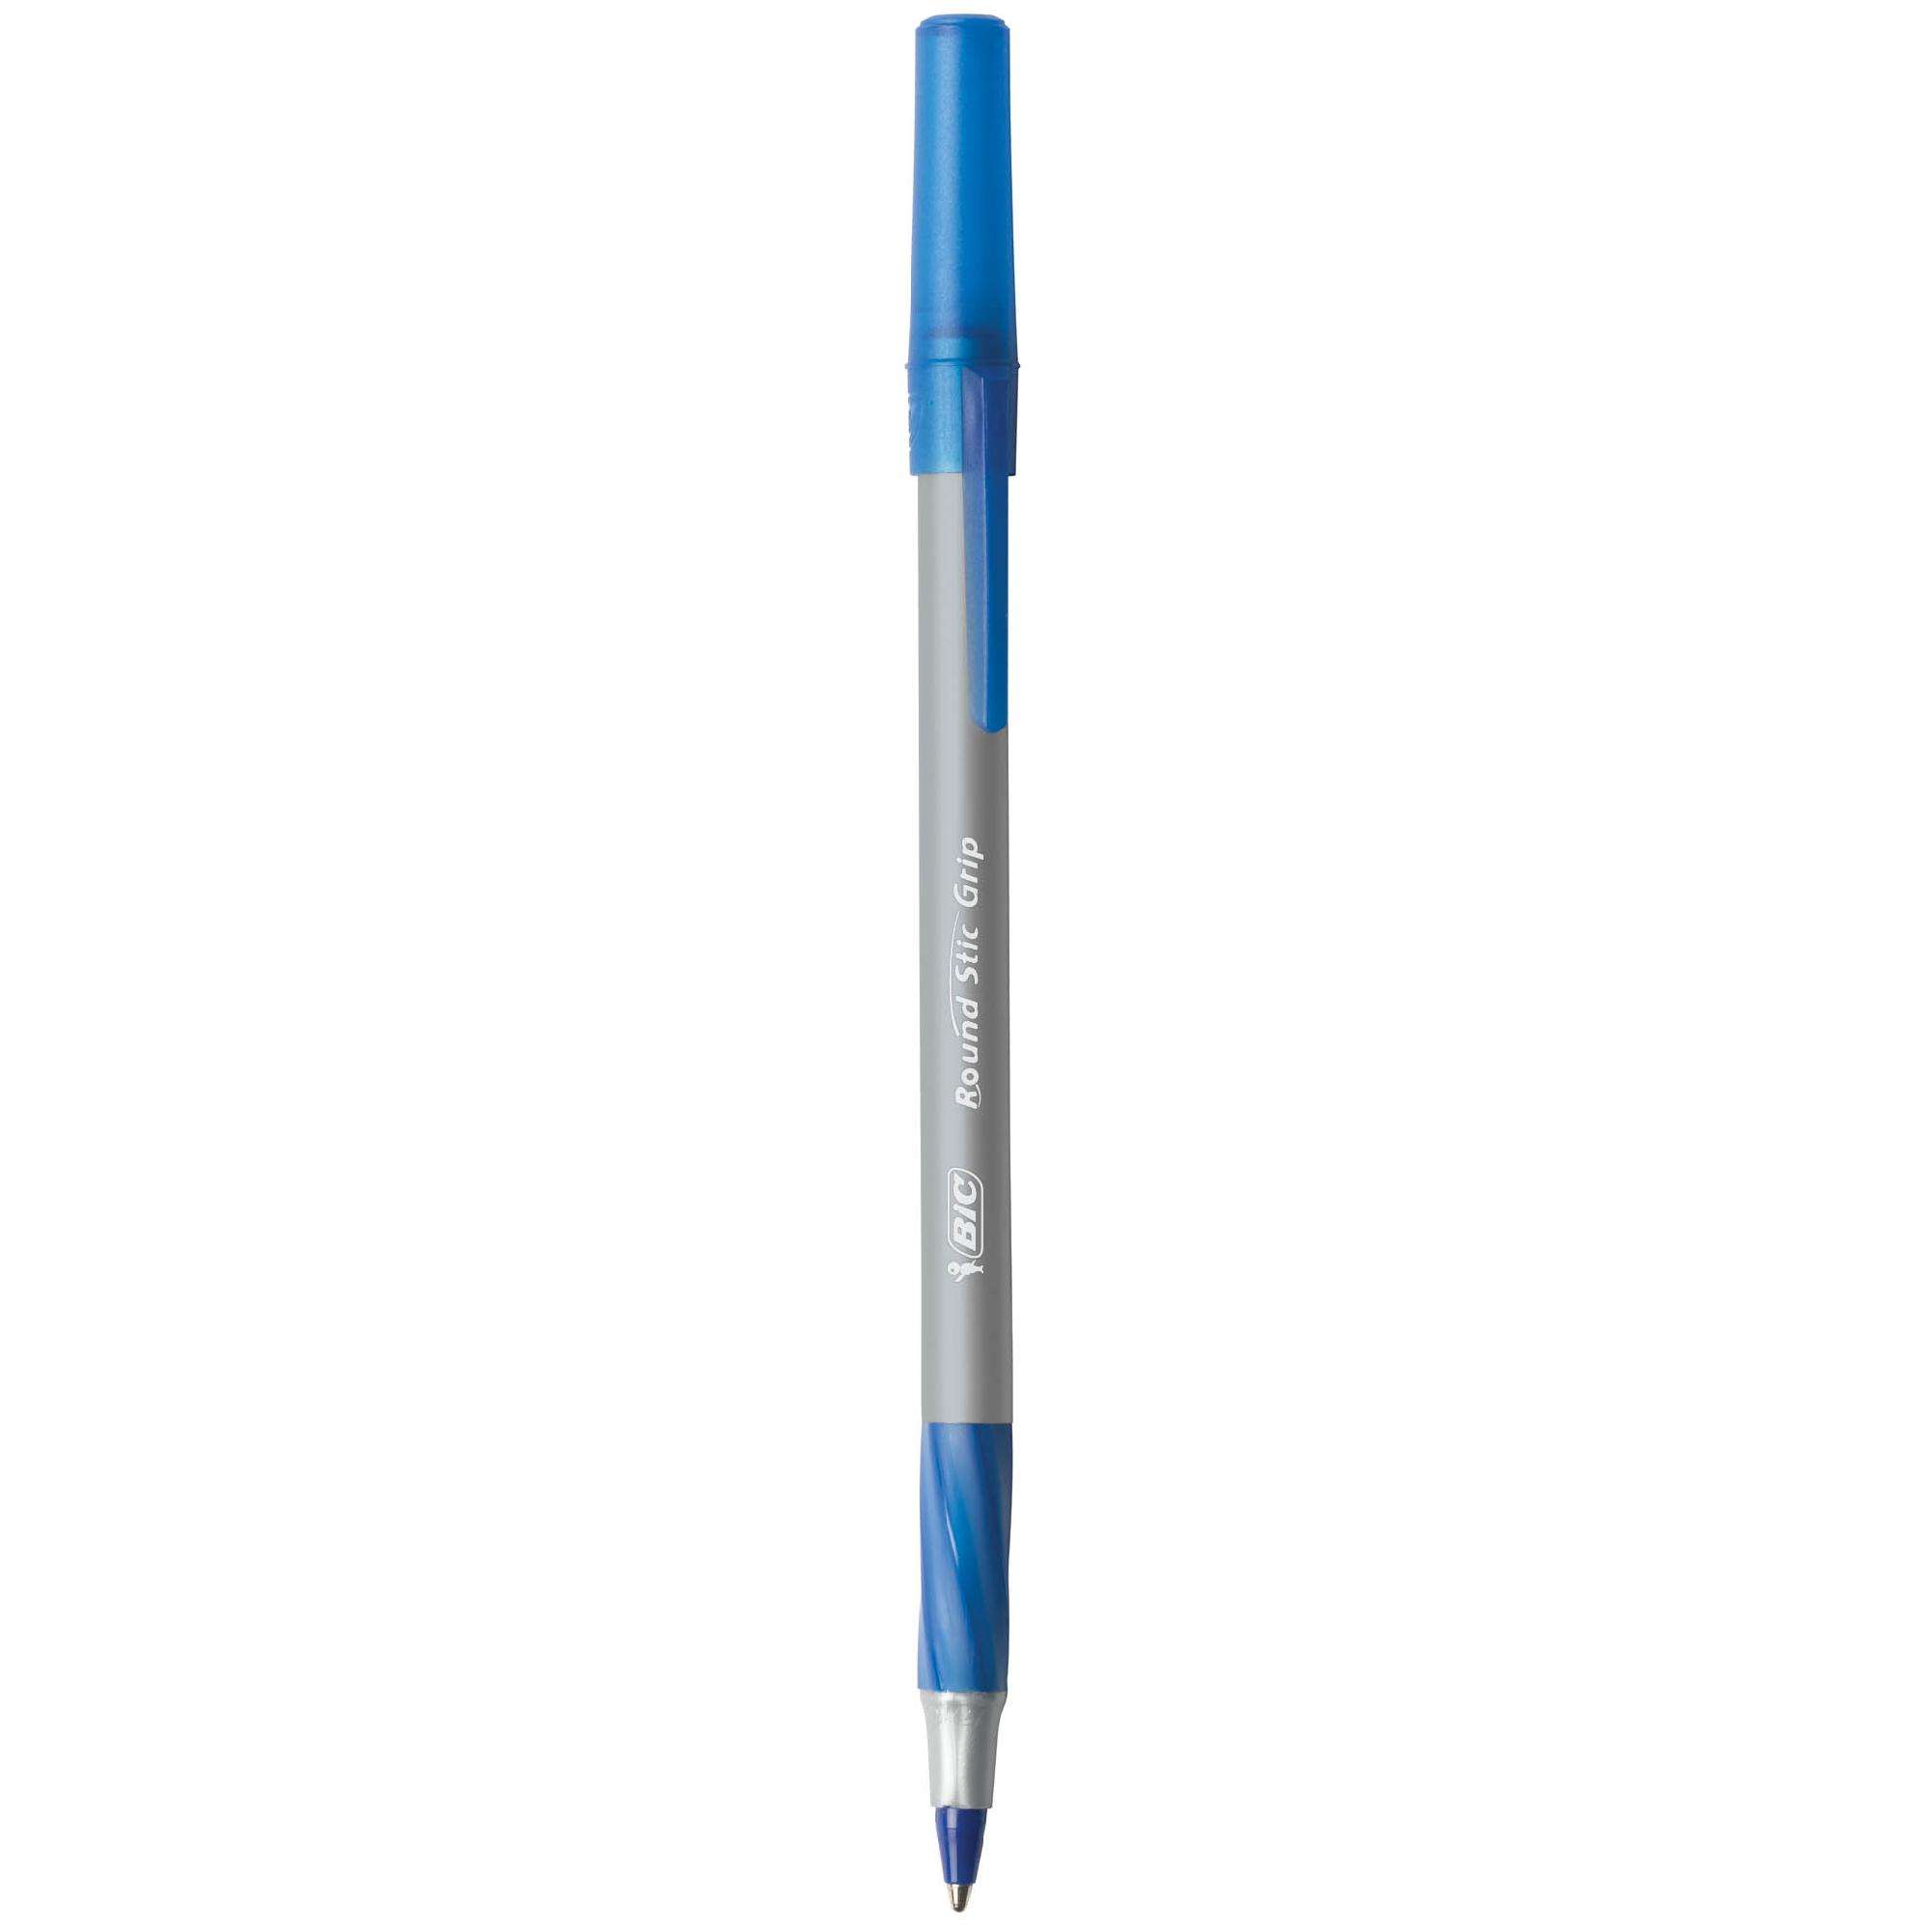 BIC Round Stic Grip Xtra Comfort Ballpoint Pen, Classic Medium Point (1.2 mm), Box of 24 Blue Pens - image 13 of 14